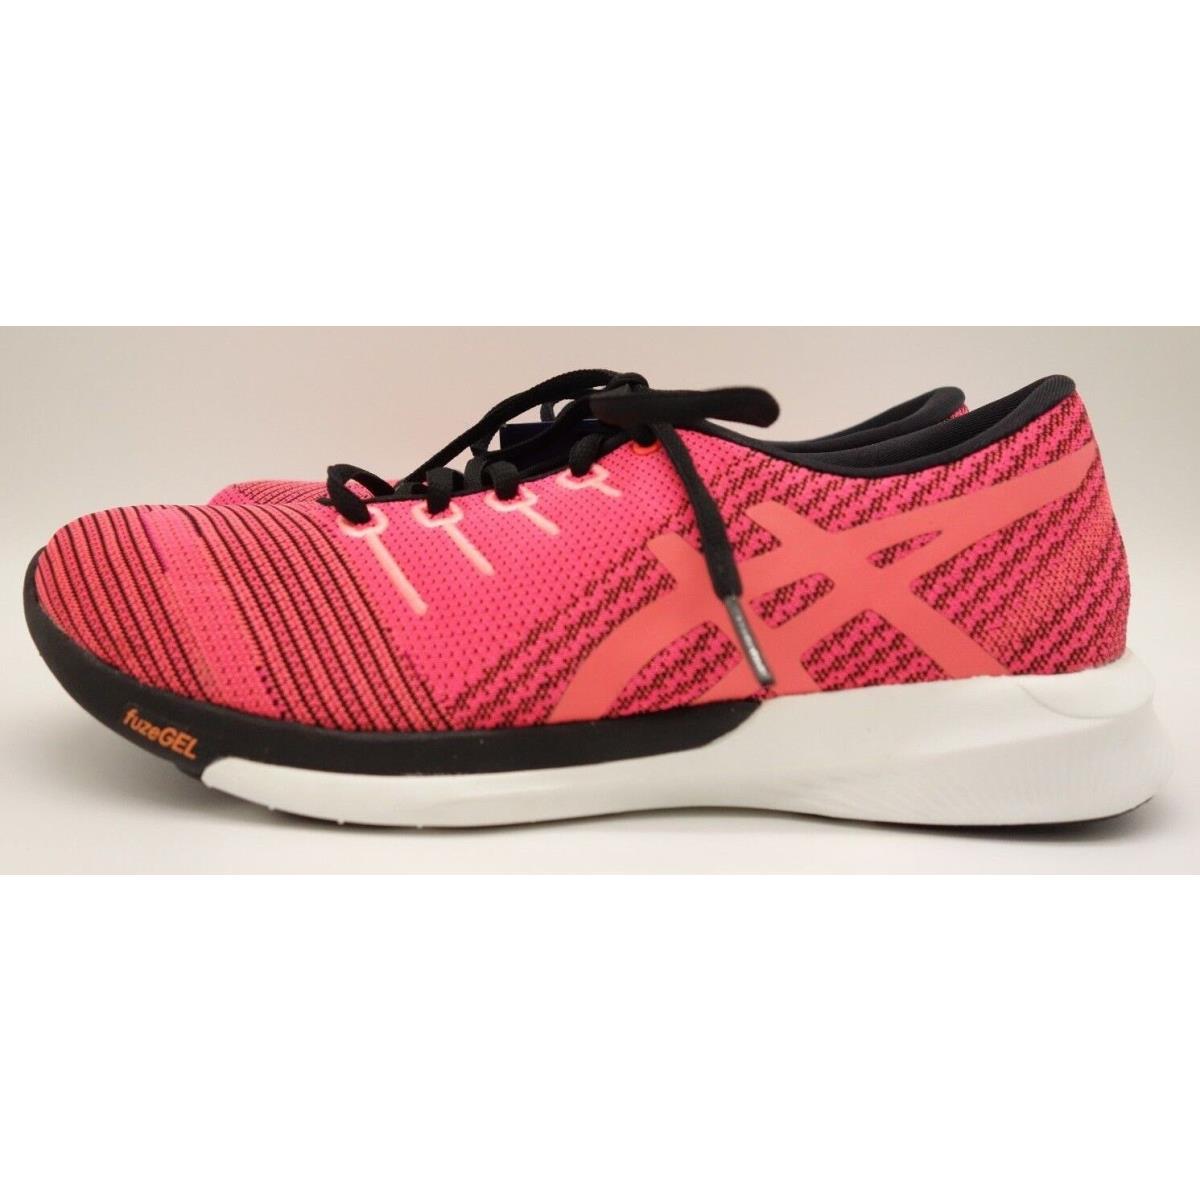 ASICS shoes FuzeX Knit - Pink 0